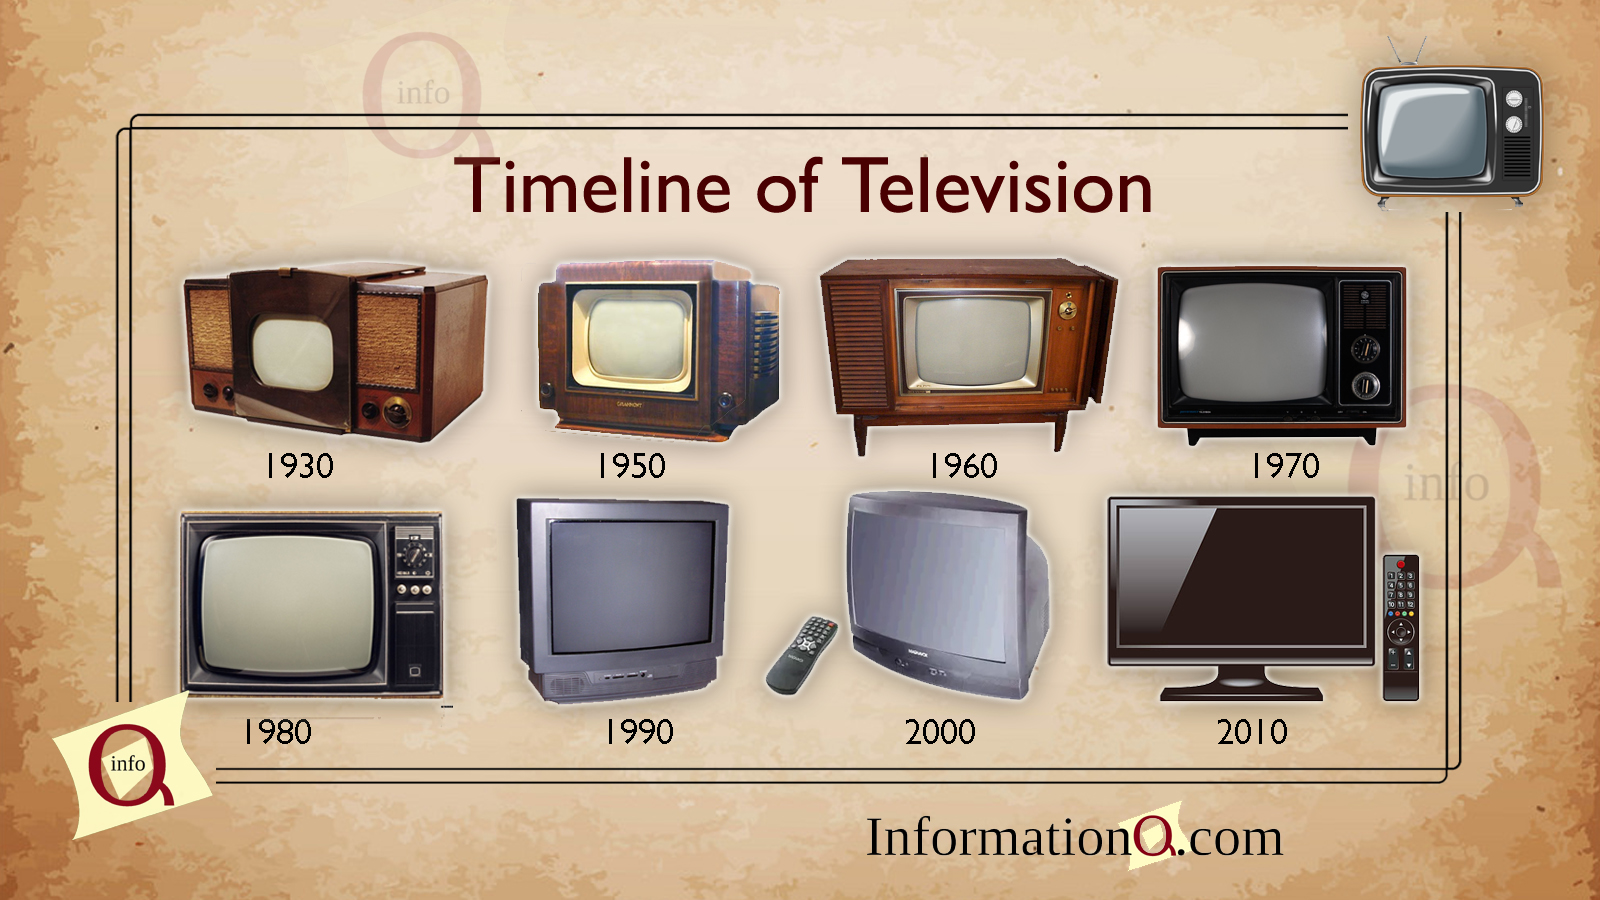 Timeline of Television